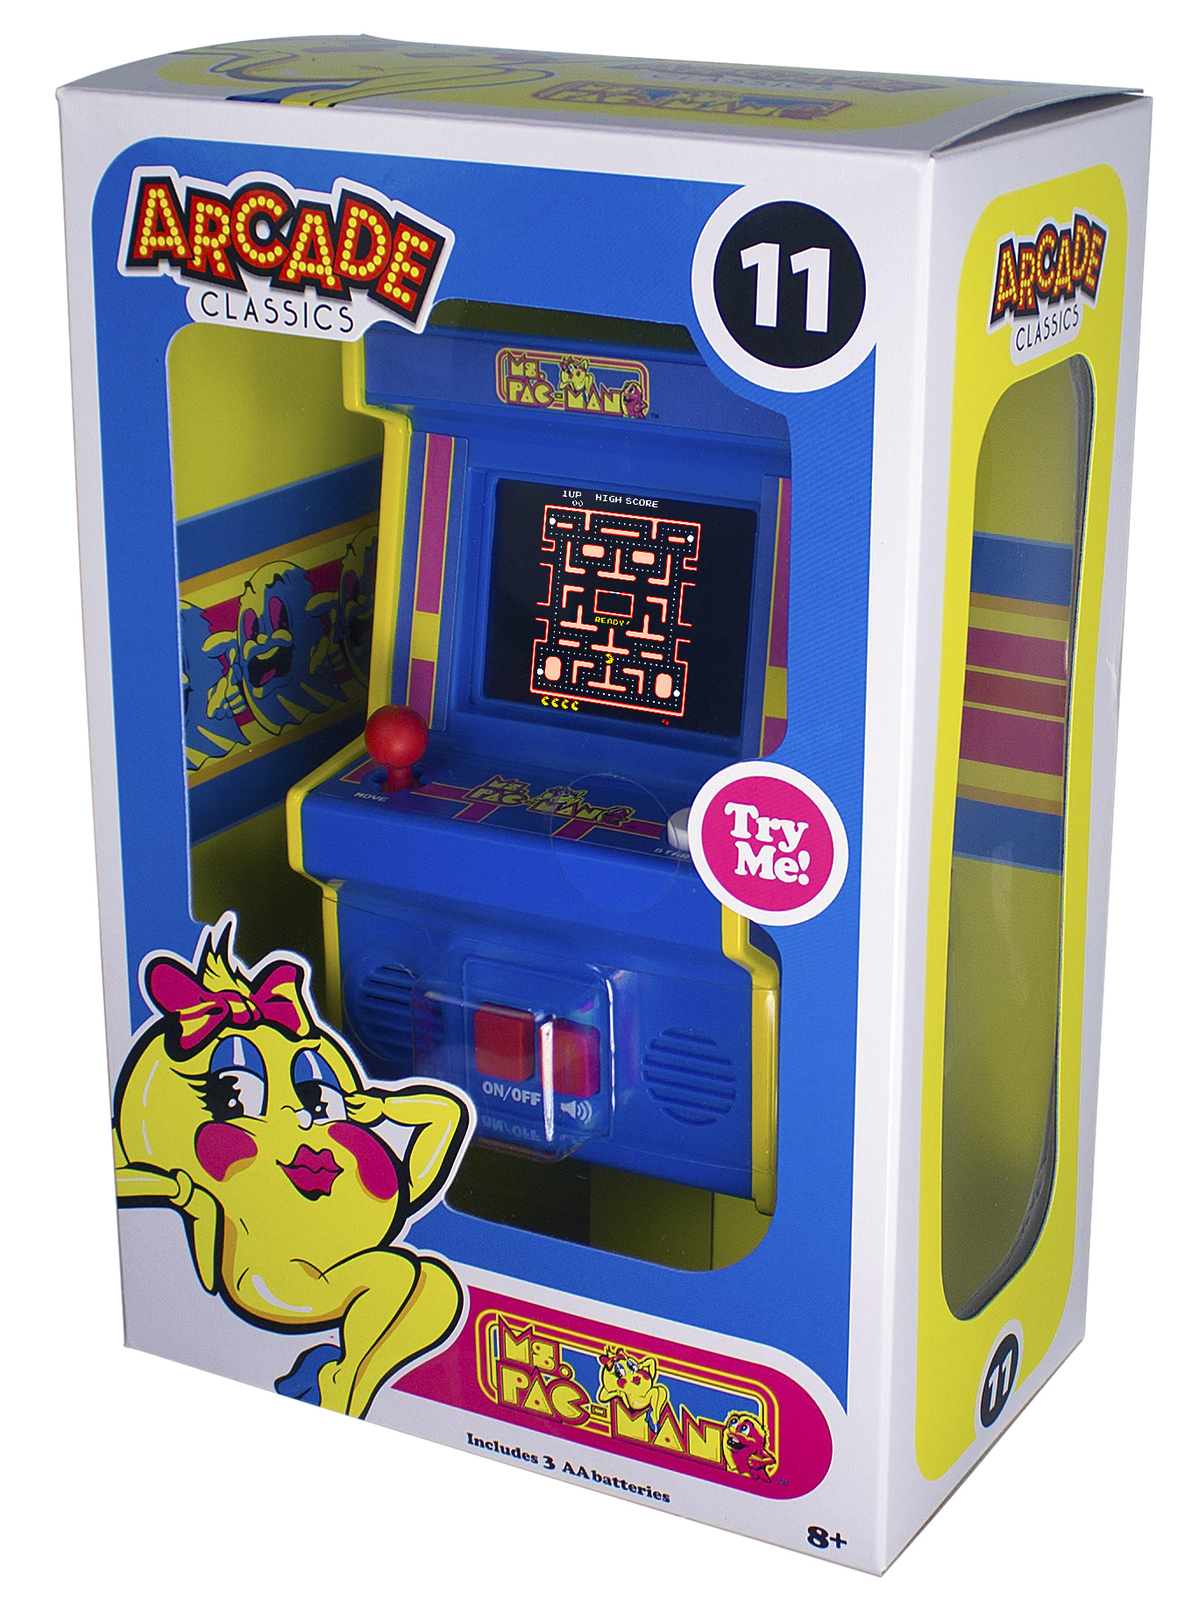 little pac man arcade game